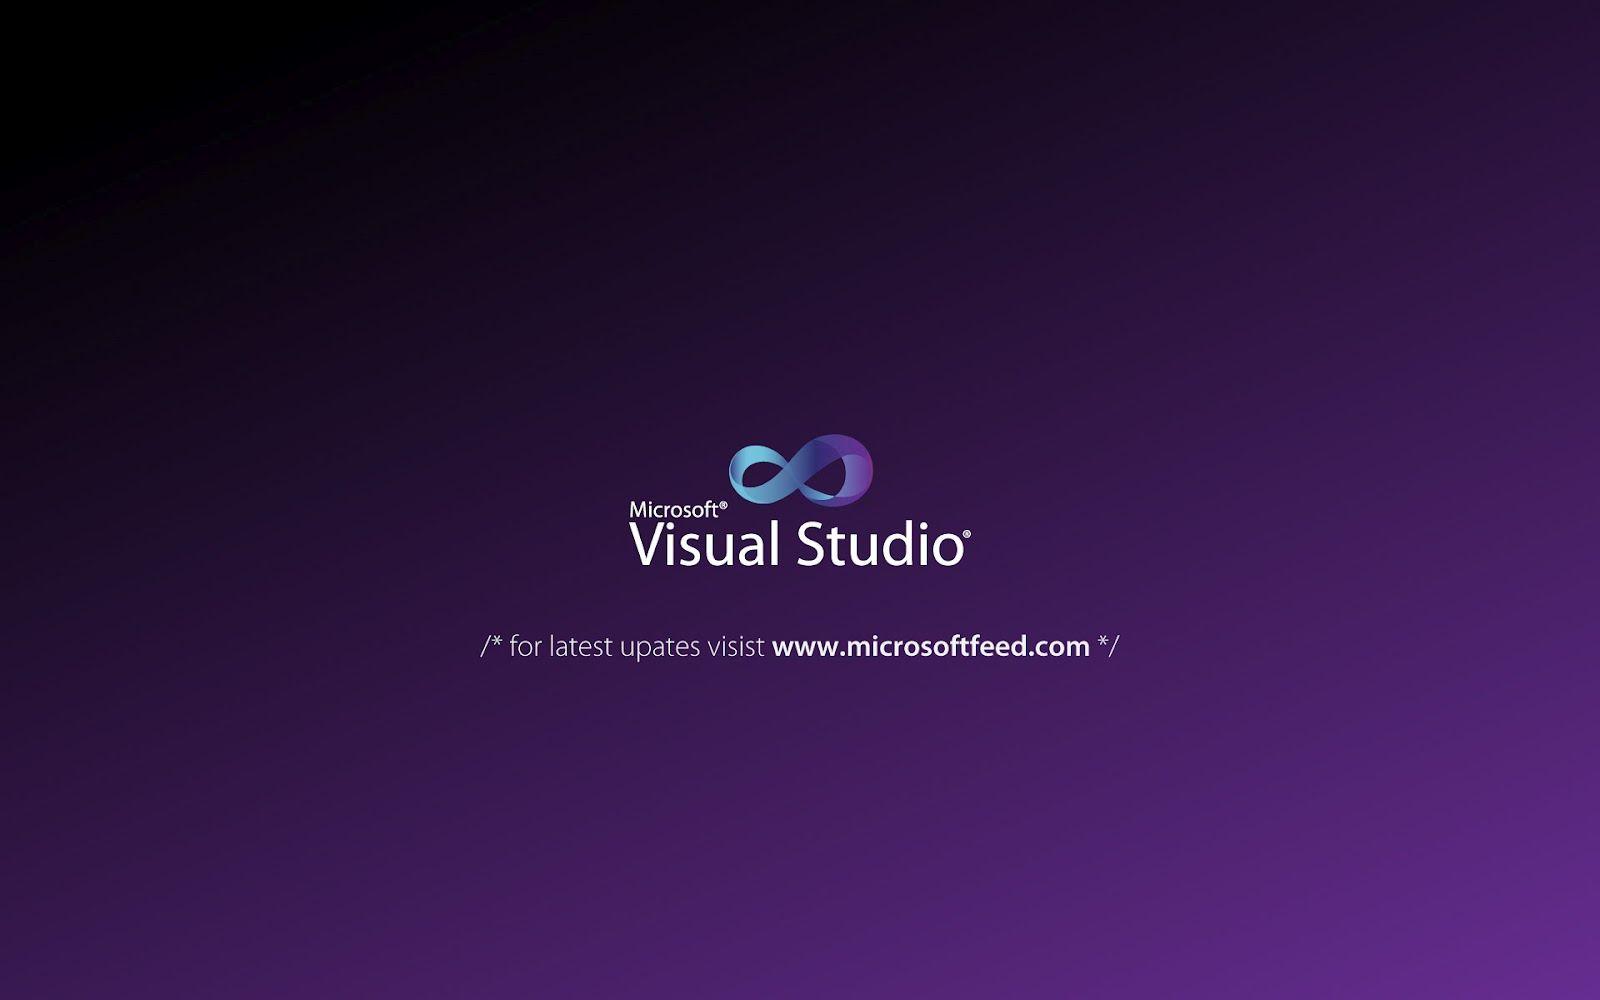 Visual Studio Wallpaper 12 by shaikhjee on DeviantArt